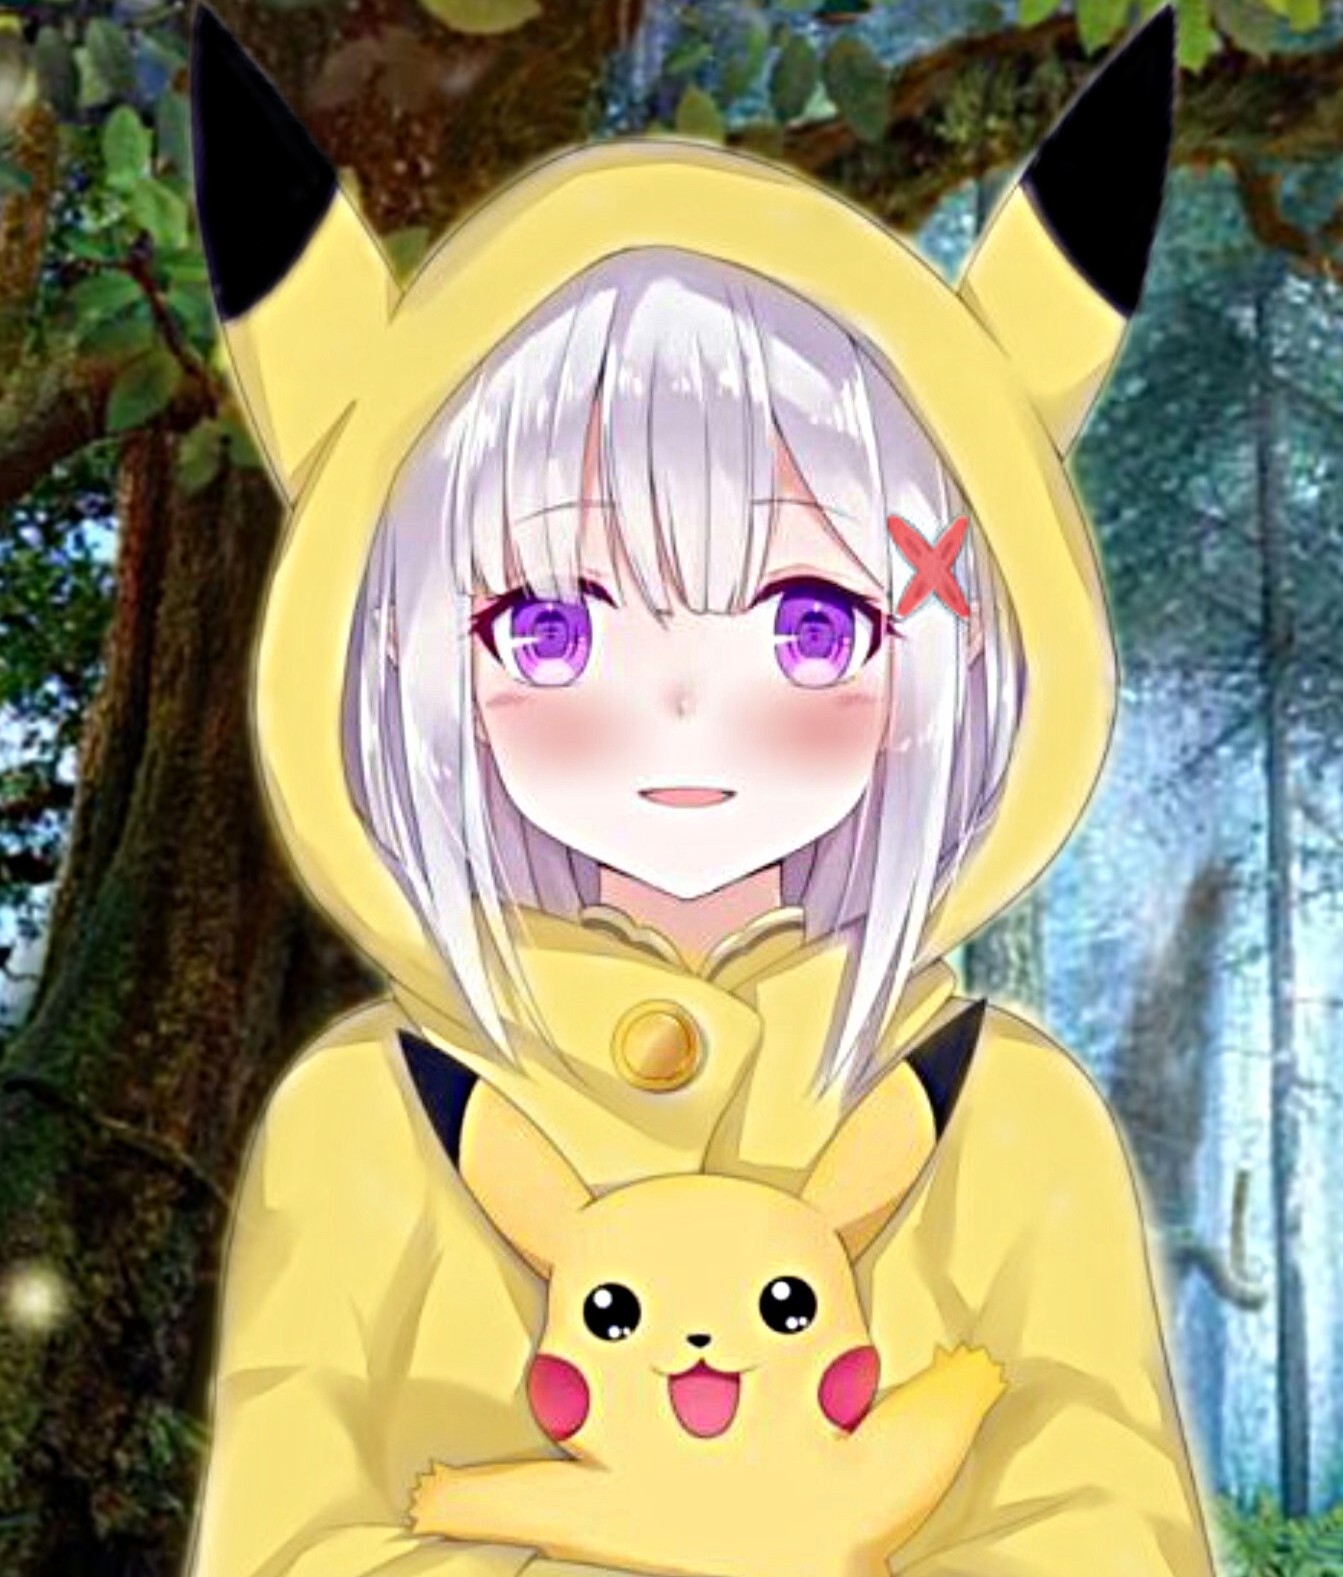 freetoedit anime girl pokemon pikachu image by @anime_girl22.